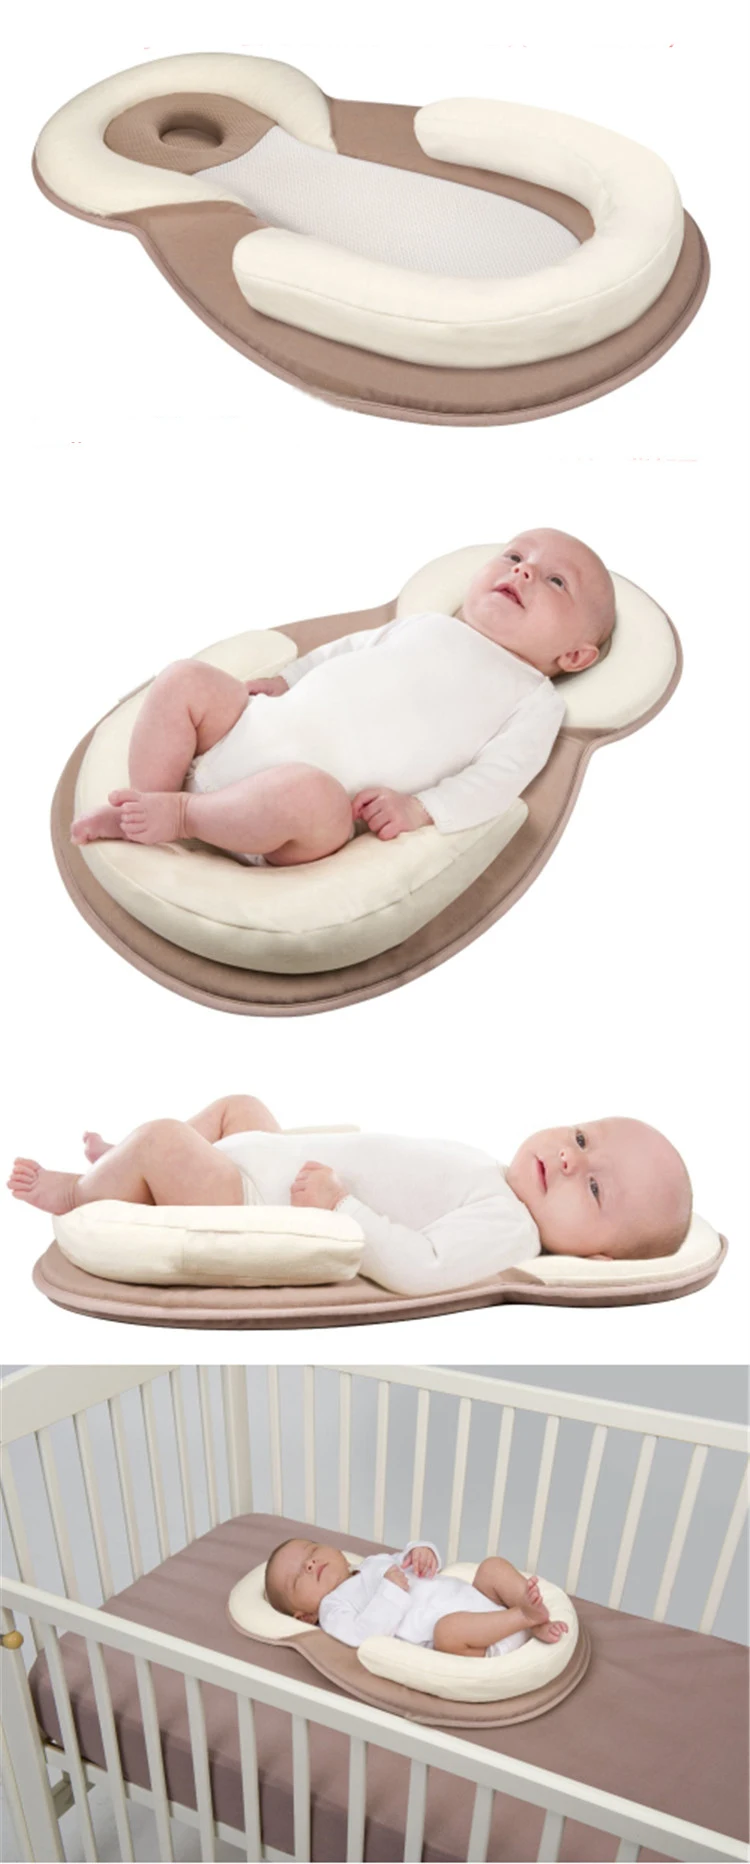 comfy baby sleep positioner